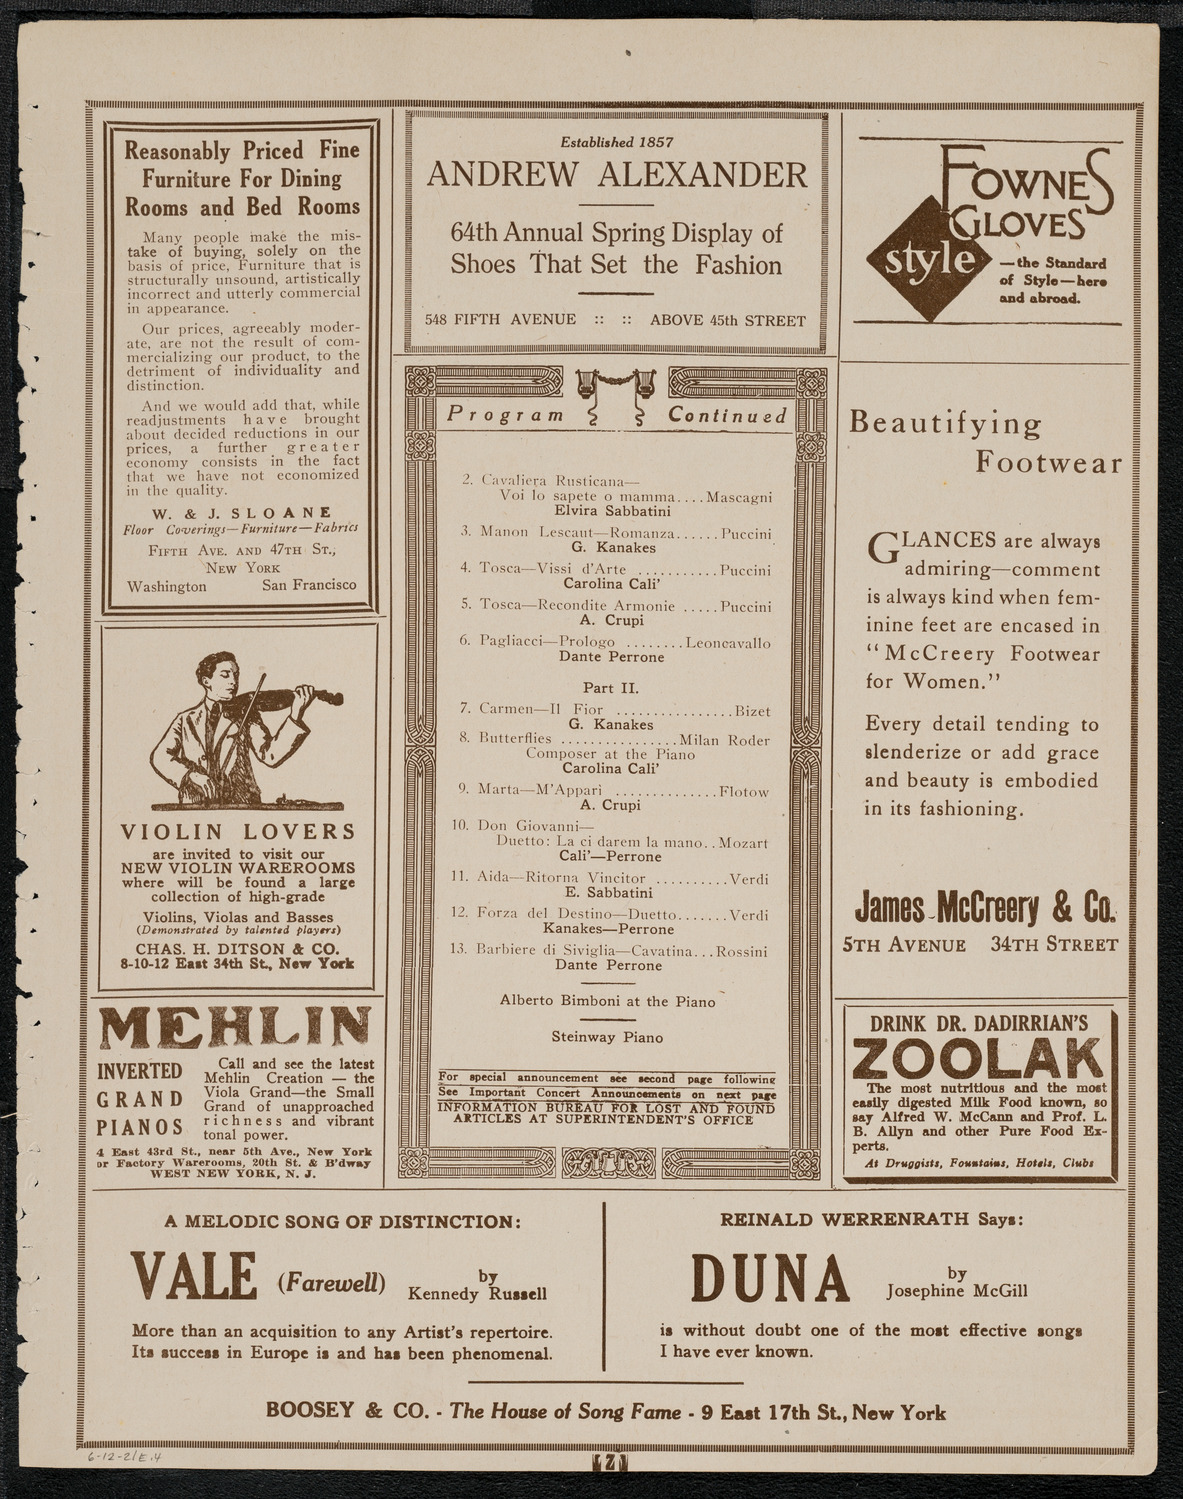 Dante Perrone and Elvira Sabbatini, June 12, 1921, program page 7